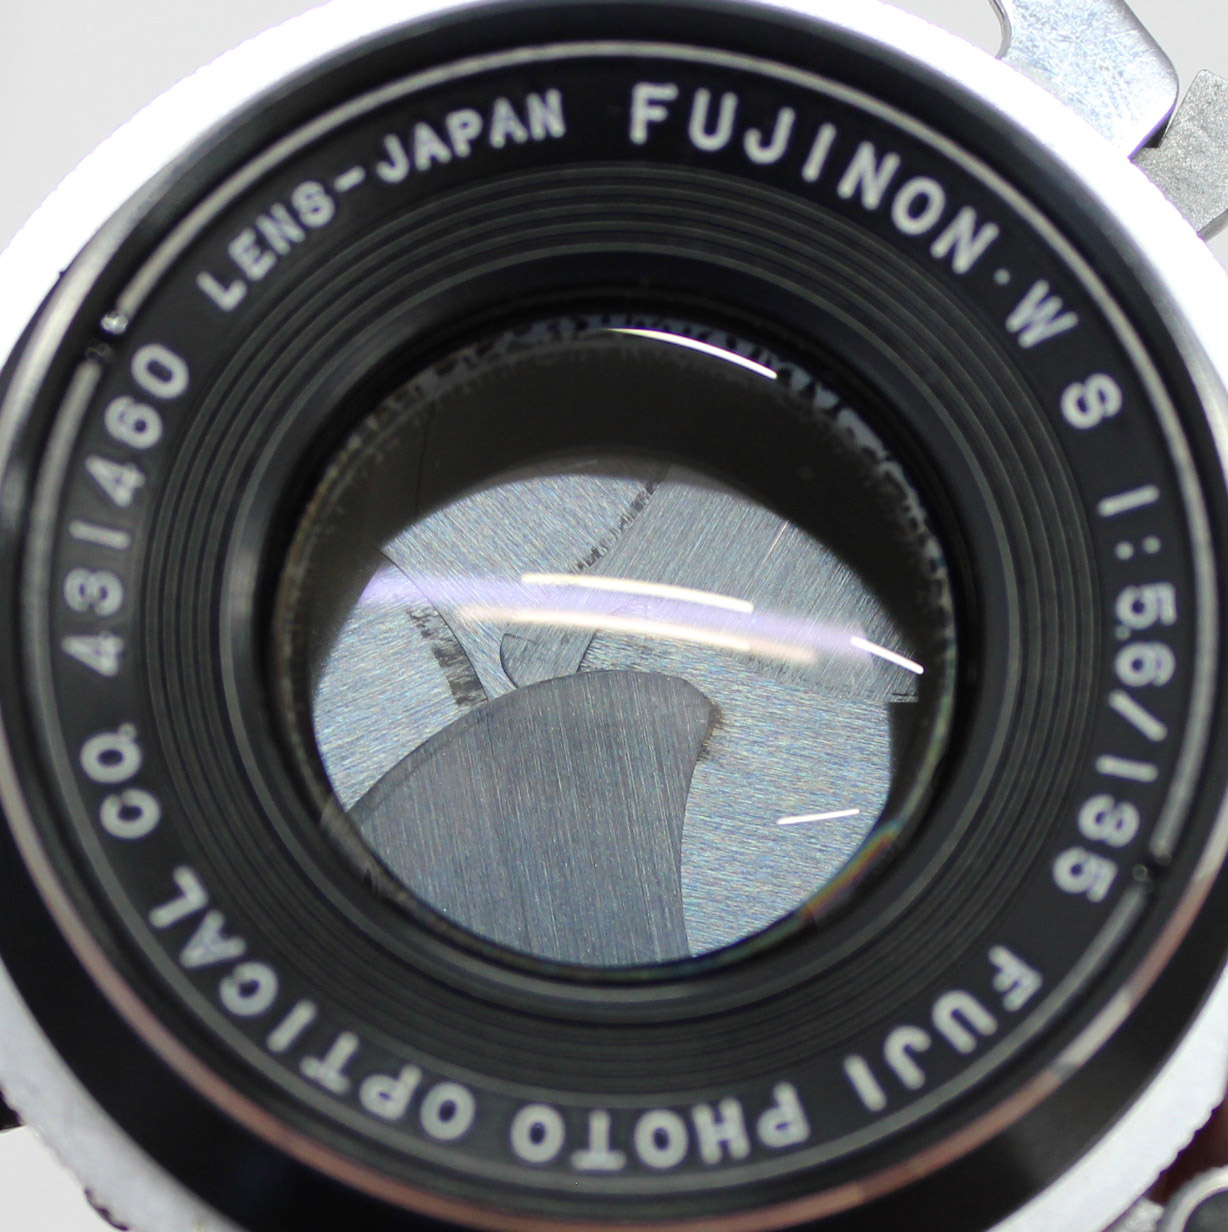 Fuji Fujinon W S 135mm F/5.6 4x5 Large Format Lens with Seiko 